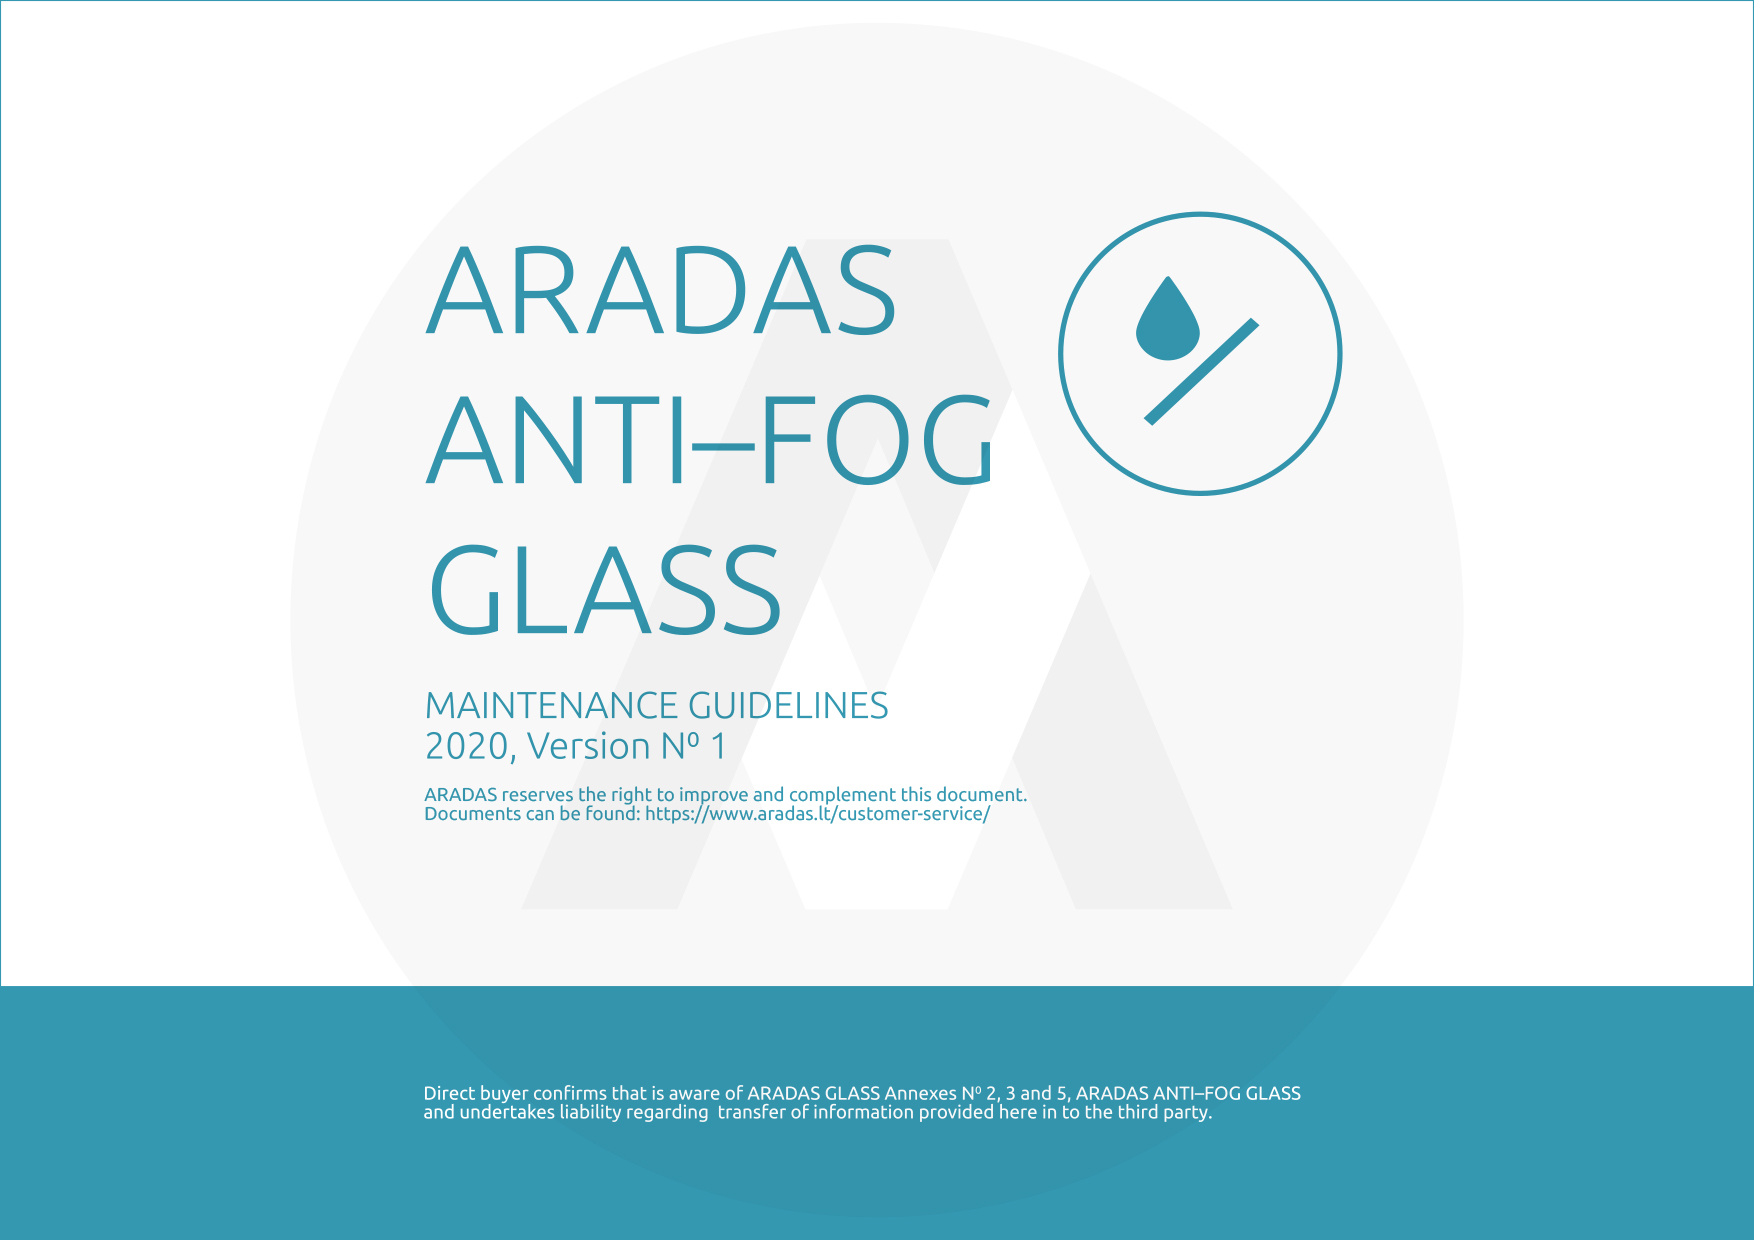 https://www.aradas.lt/wp-content/uploads/2020/04/ARADAS_ANTI-FOG_GLASS.jpg